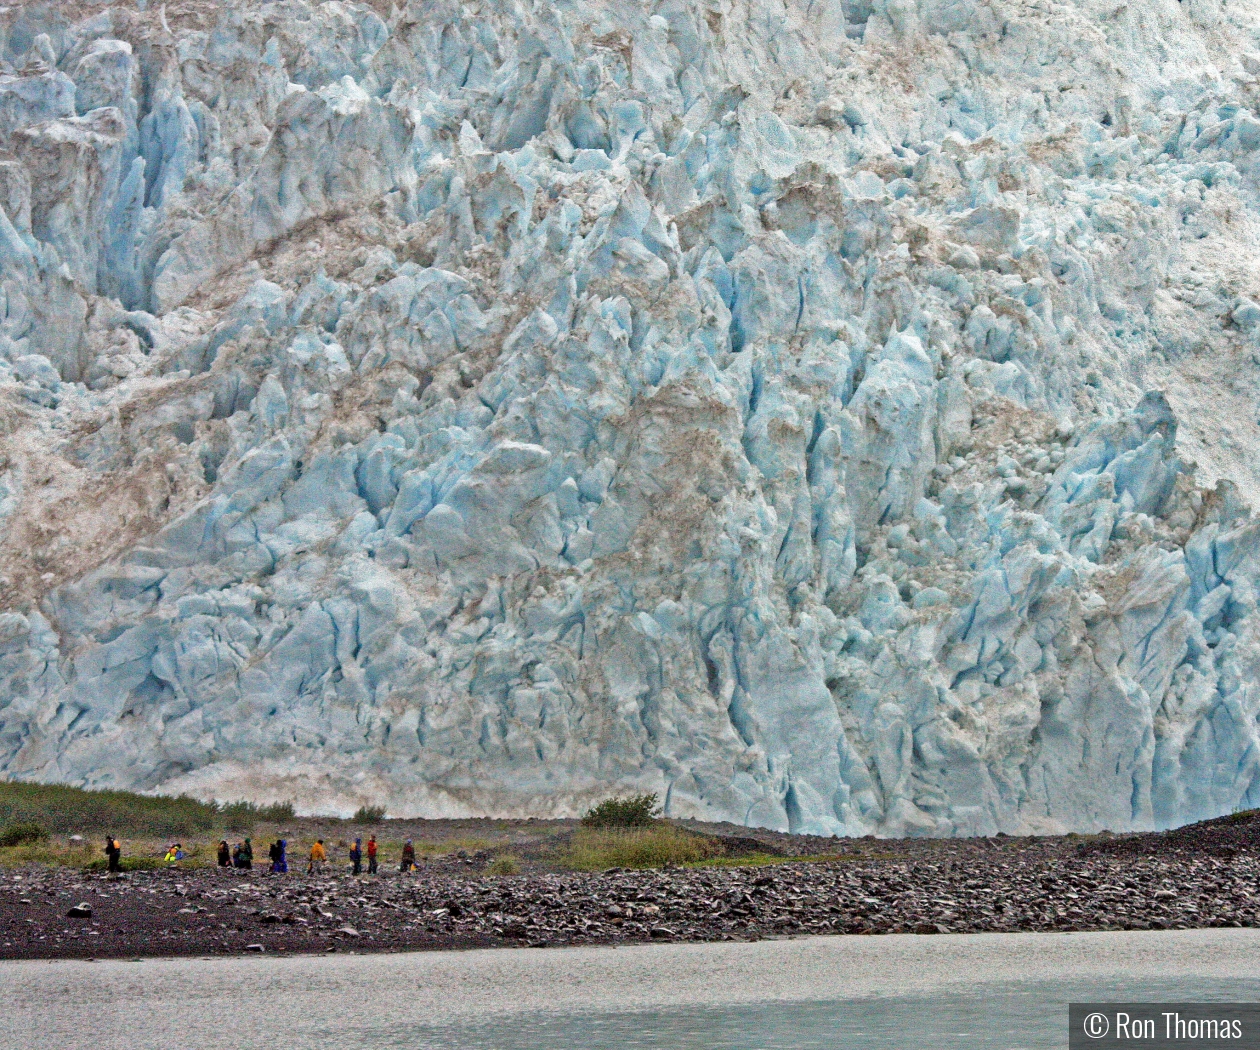 Hiking near a glacier by Ron Thomas